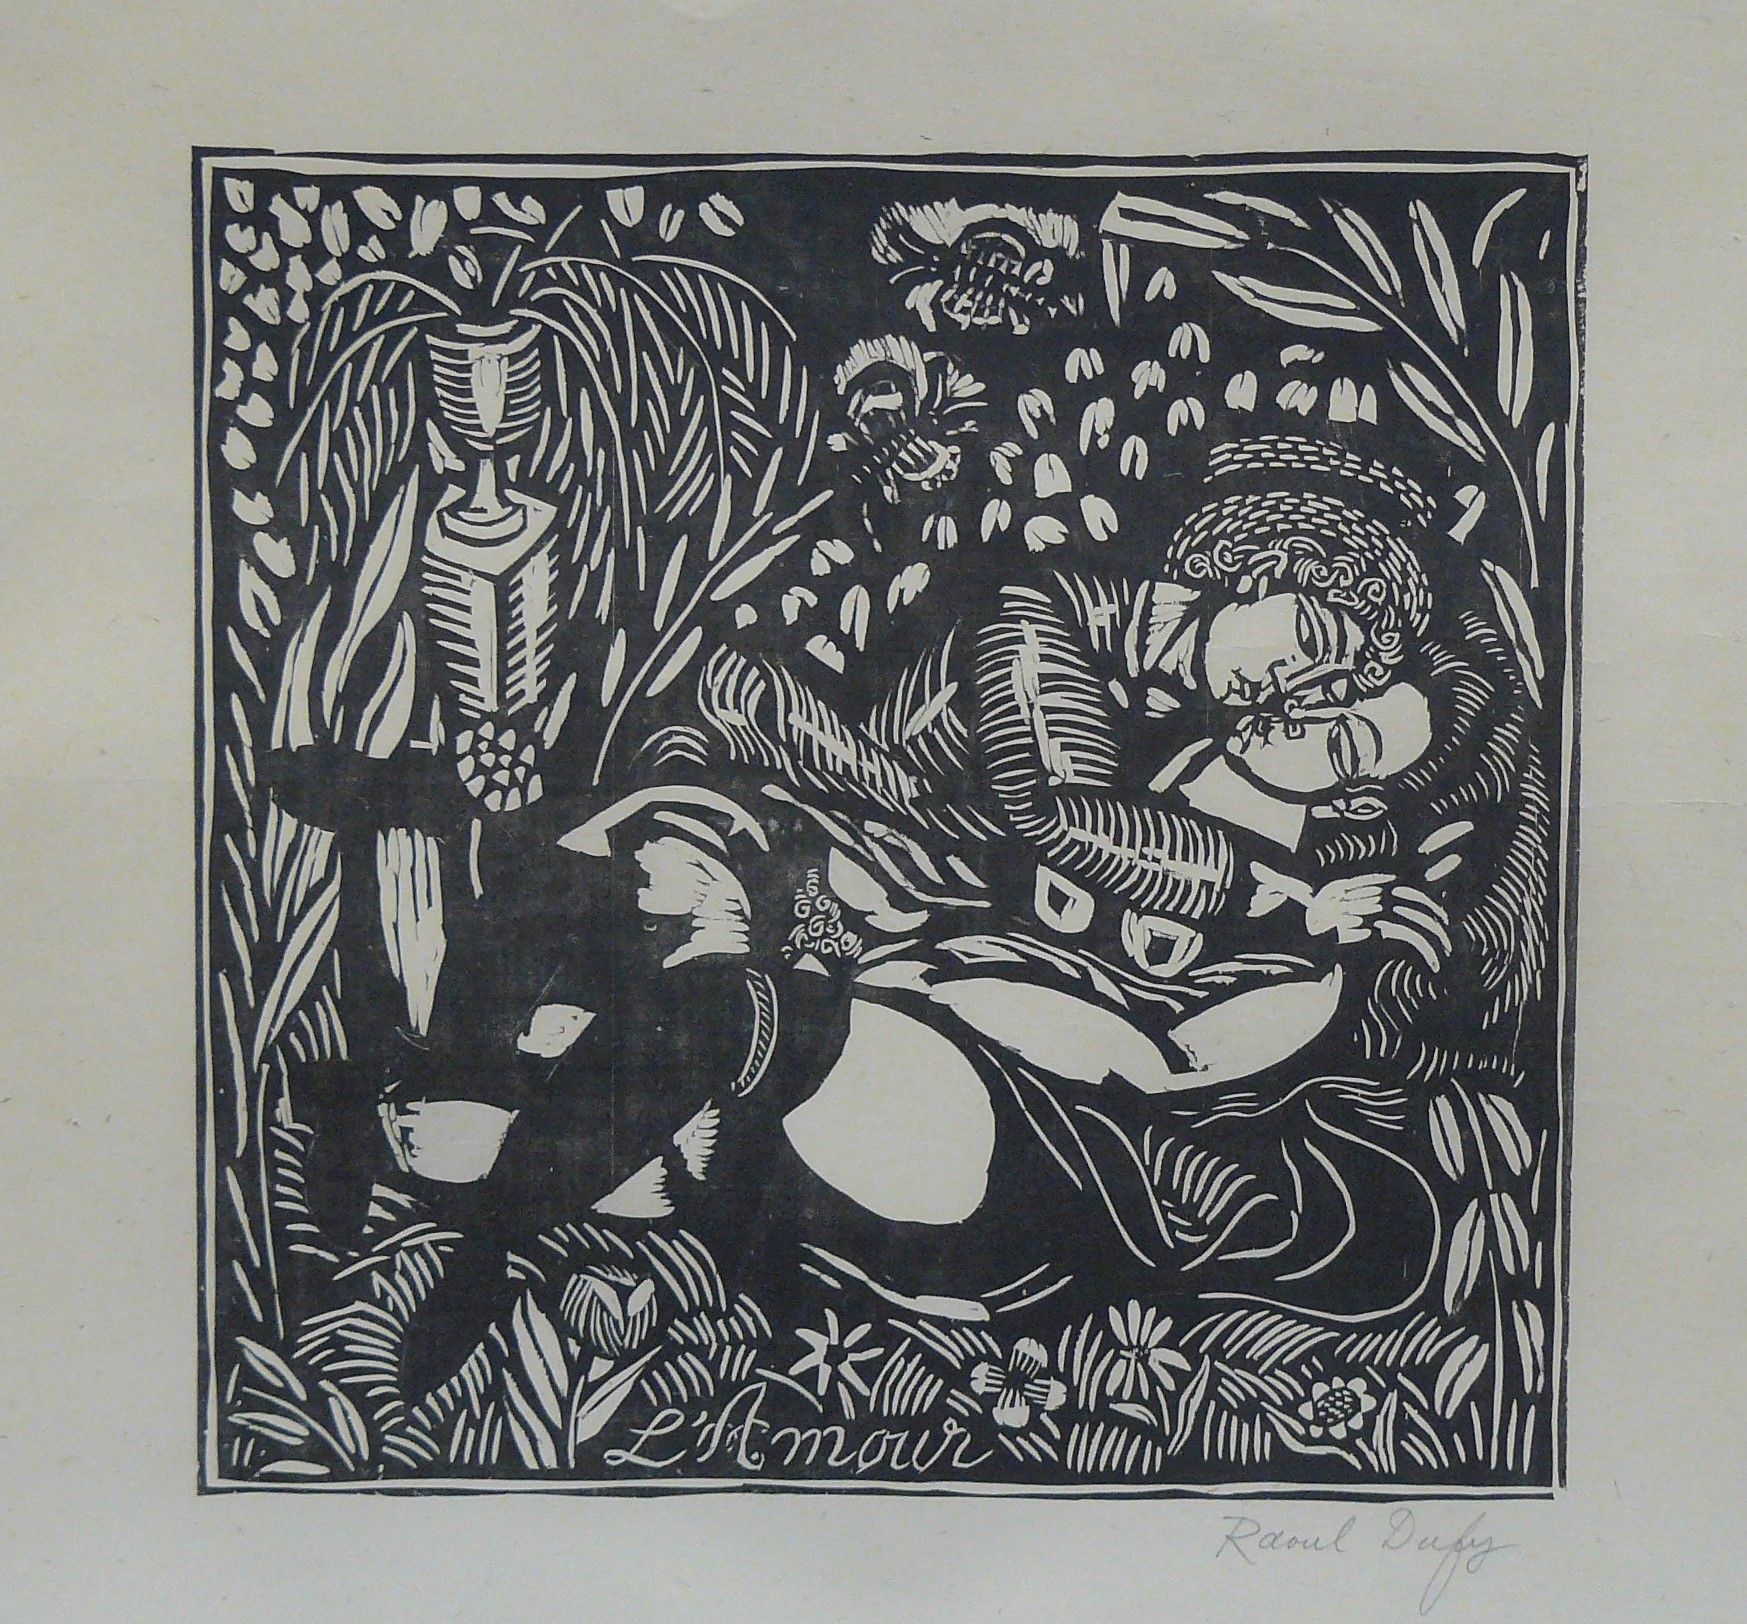 DUFY 拉乌尔-杜菲（1877-1953）：《爱》，木刻，右下方有签名，编号26 / 100 - 44 x 53 cm